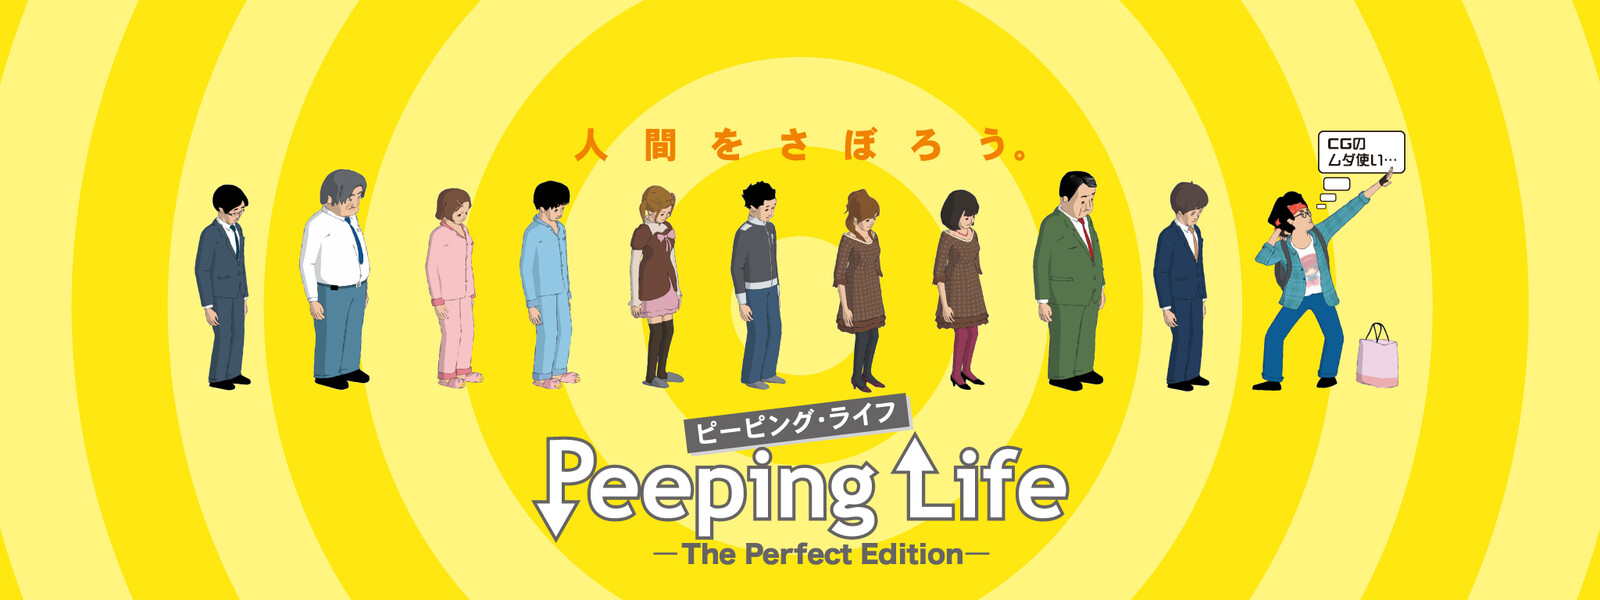 Peeping Life (ピーピング･ライフ) -The Perfect Edition- イエロー盤の動画 - Peeping Life (ピーピング・ライフ) -WORLD HISTORY-